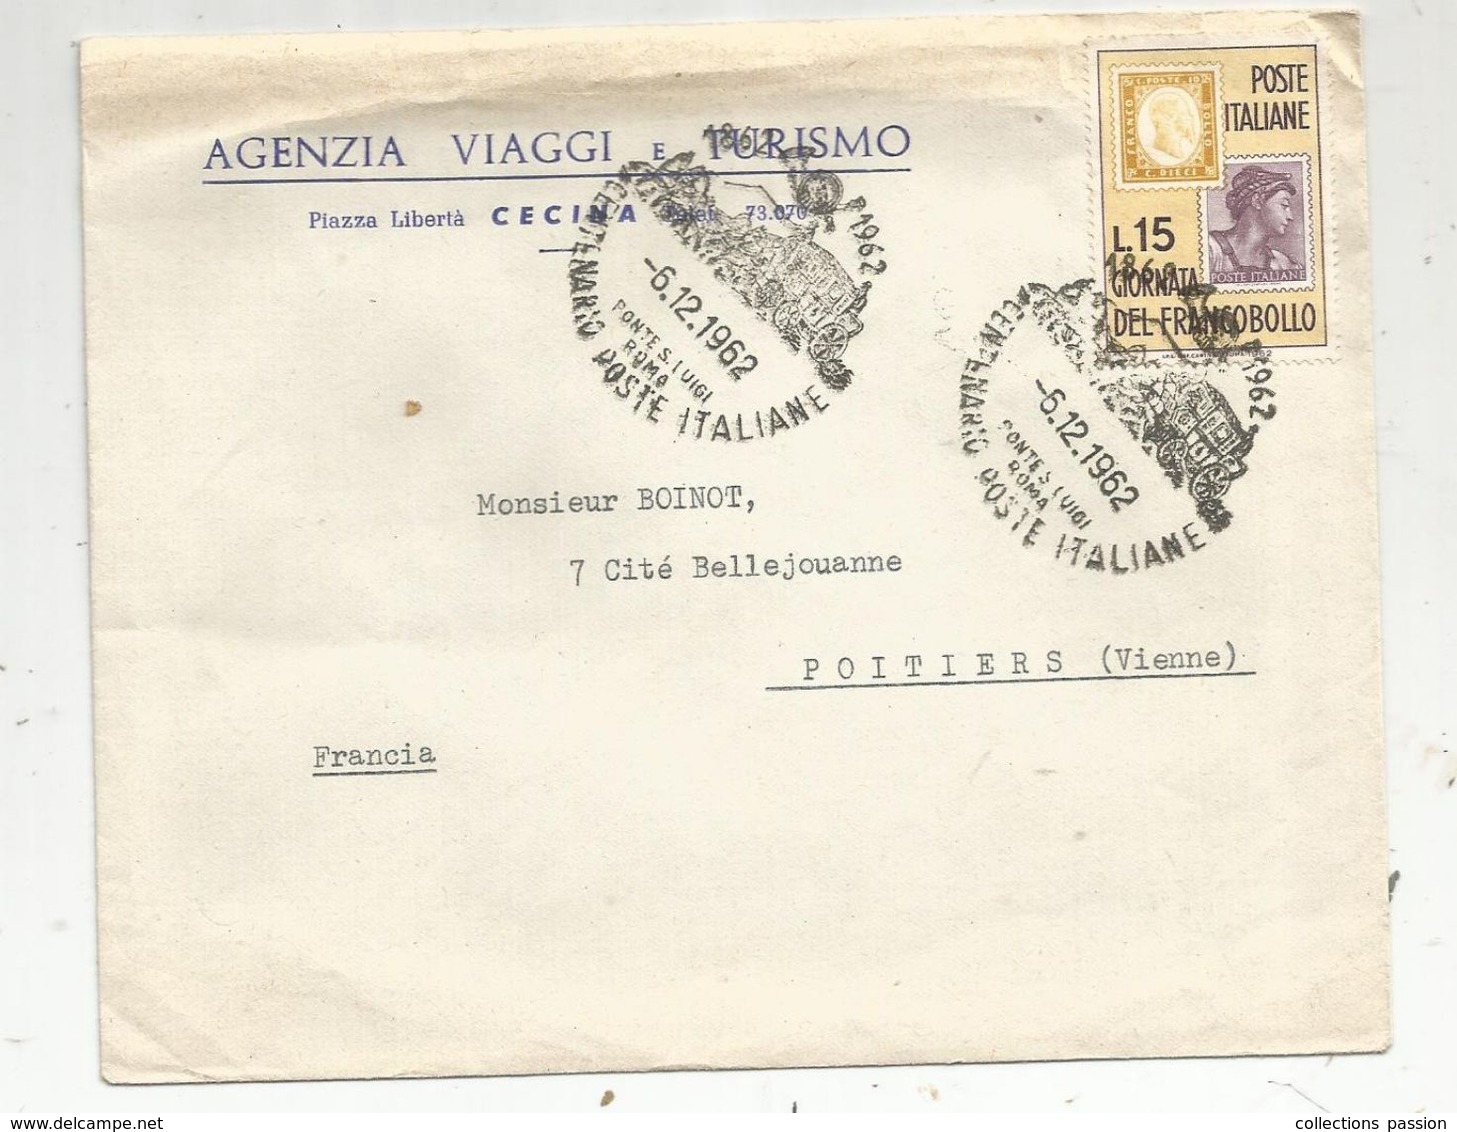 Lettre , ITALIE ,centenario Poste Italiane ,1962 , Ponte S. Luigi , ROMA ,agenzia Viaggi E Turismo , Cecina - Maschinenstempel (EMA)